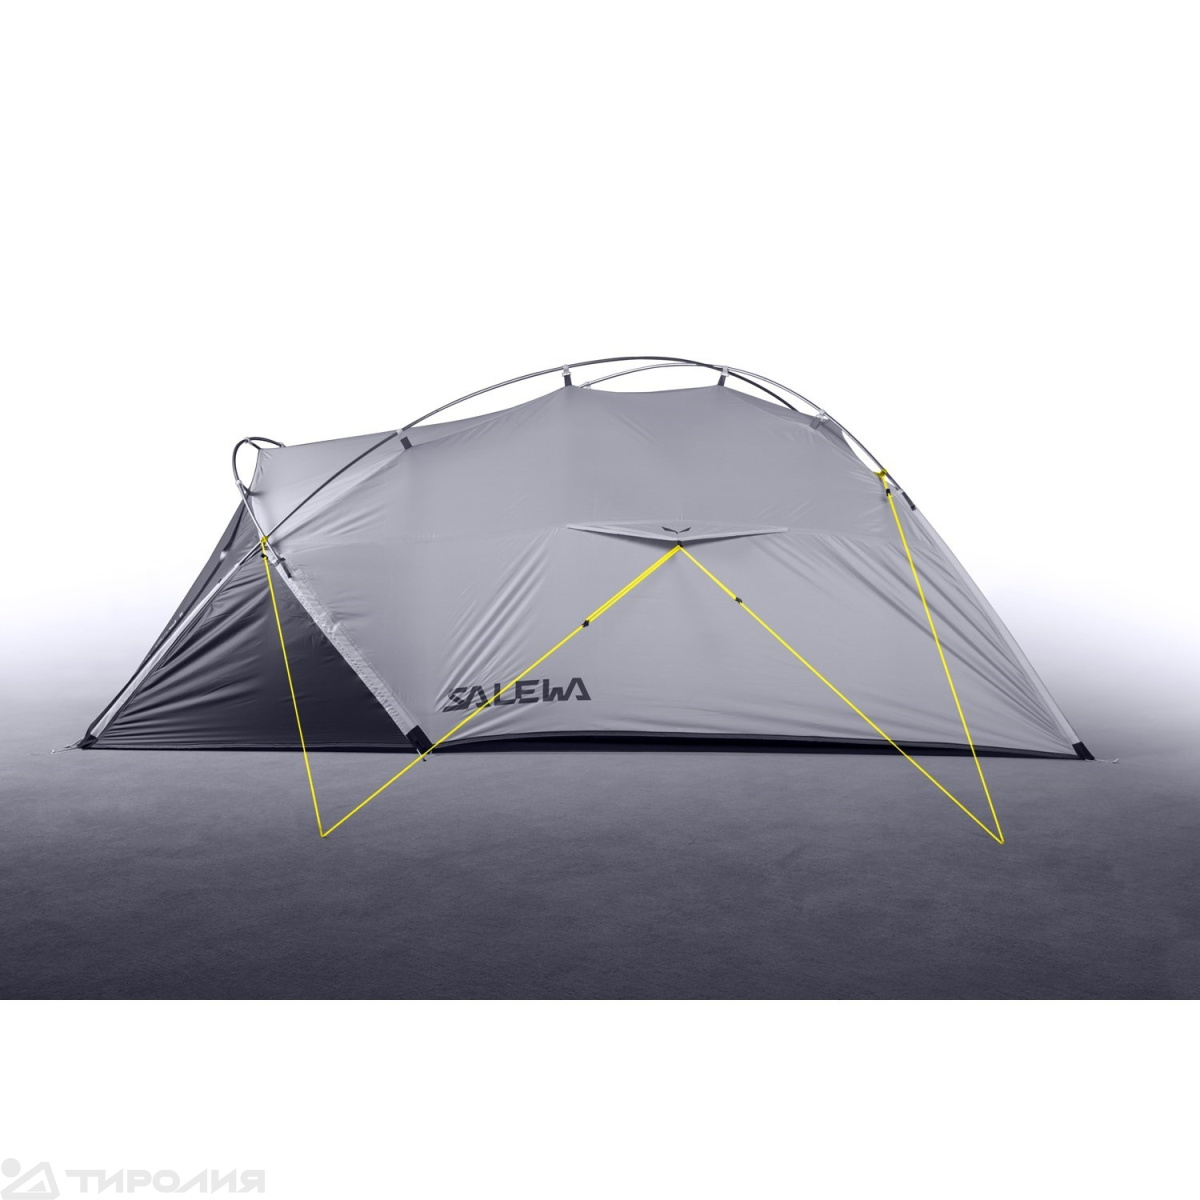 Палатка Salewa: Litetrek Pro lll Tent